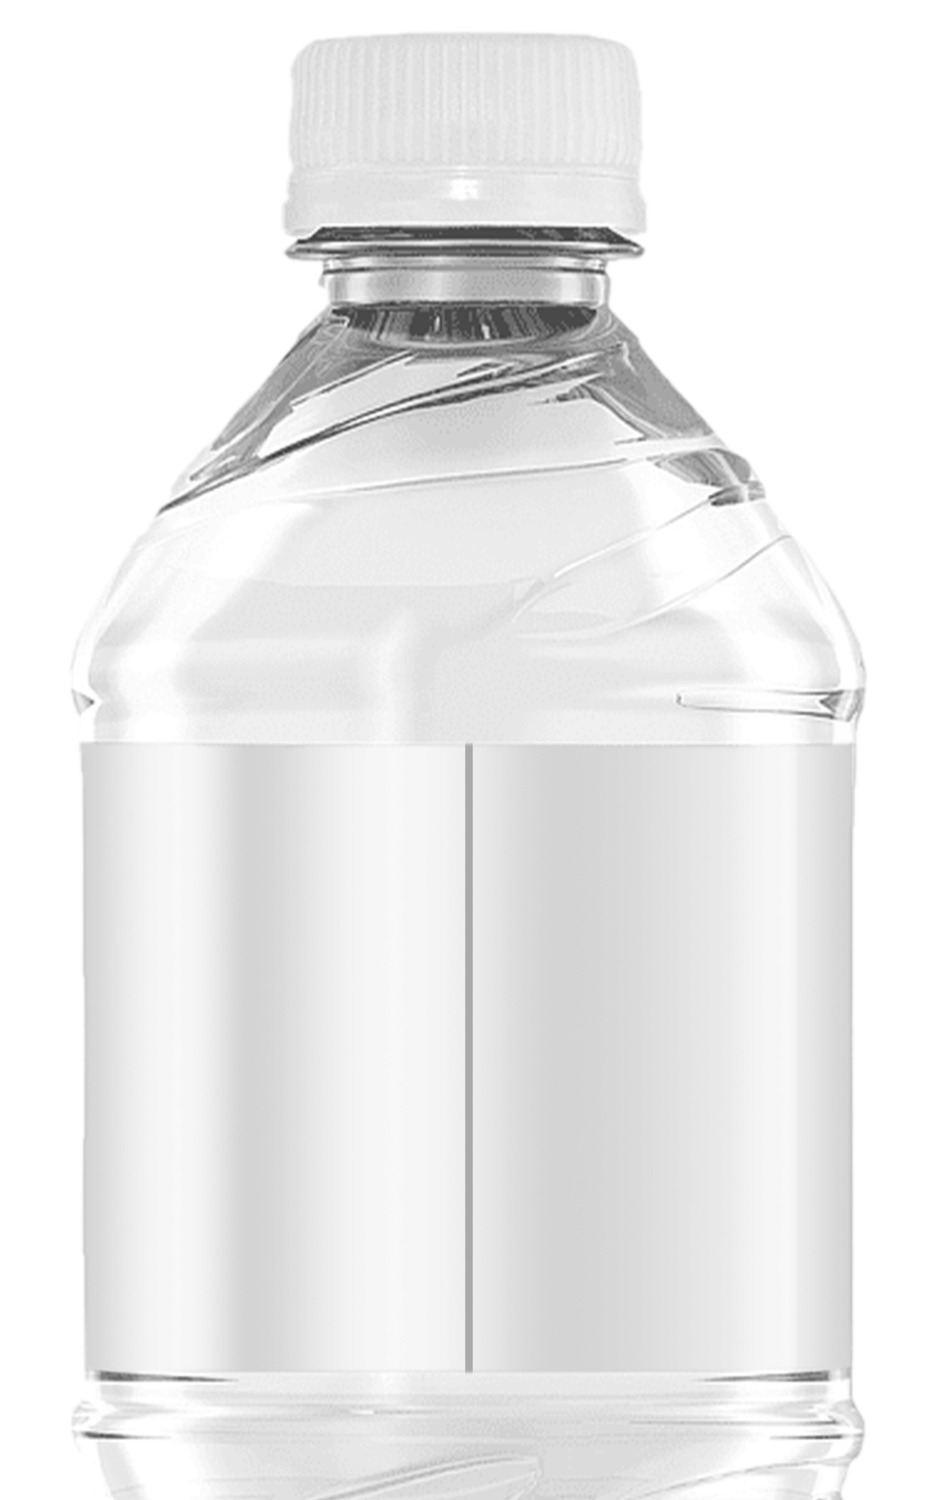 Custom Bottled Water Size Information 